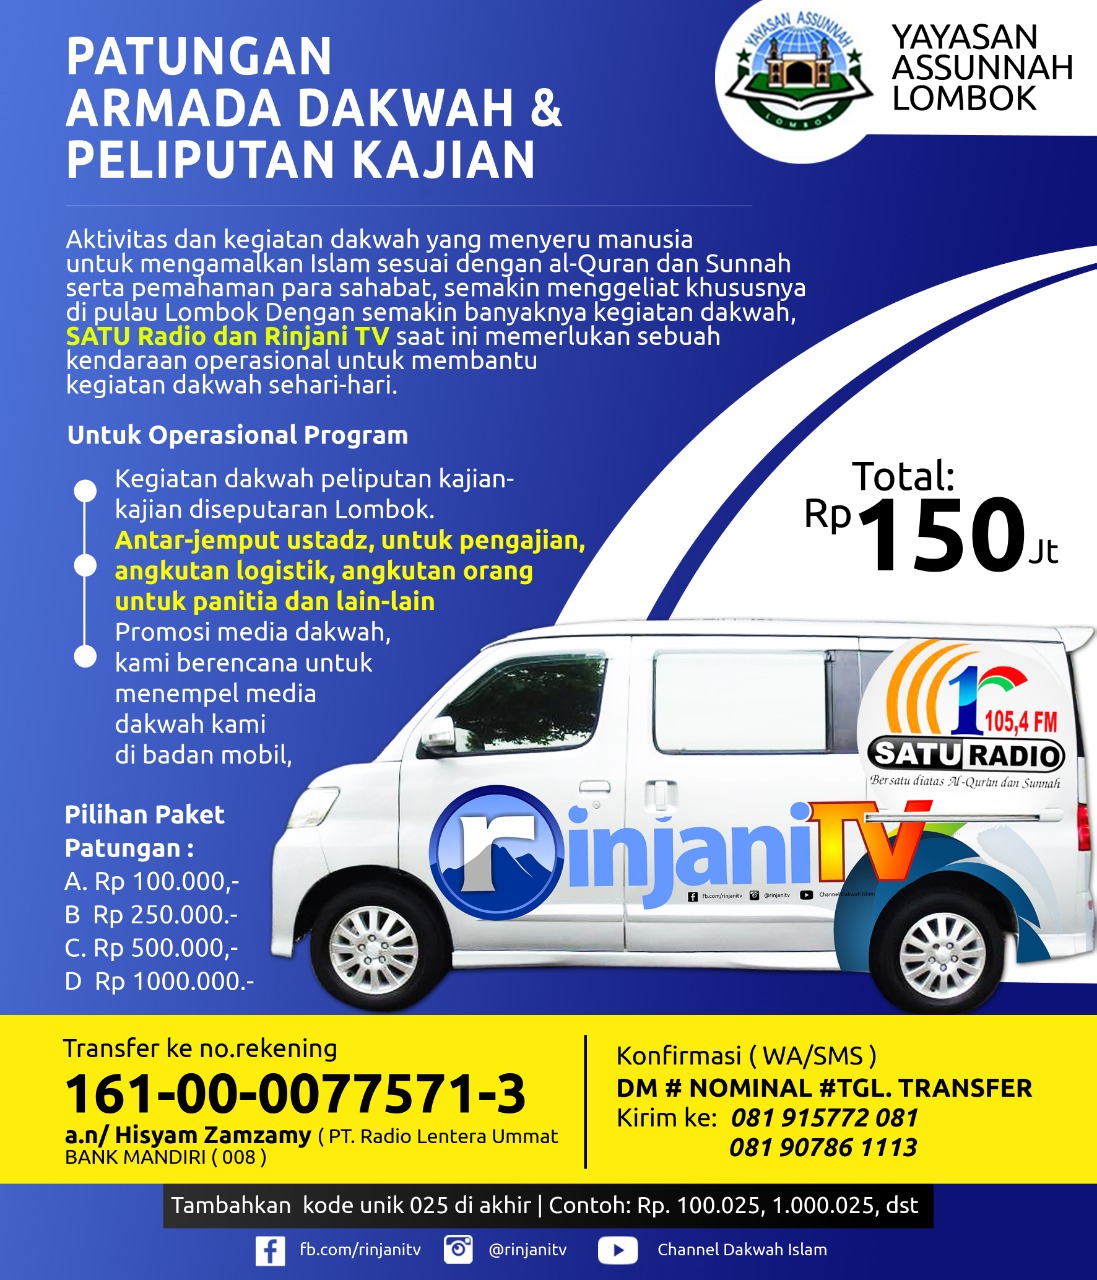 Donasi Mobil Tim Media Dakwah As-sunnah Lombok